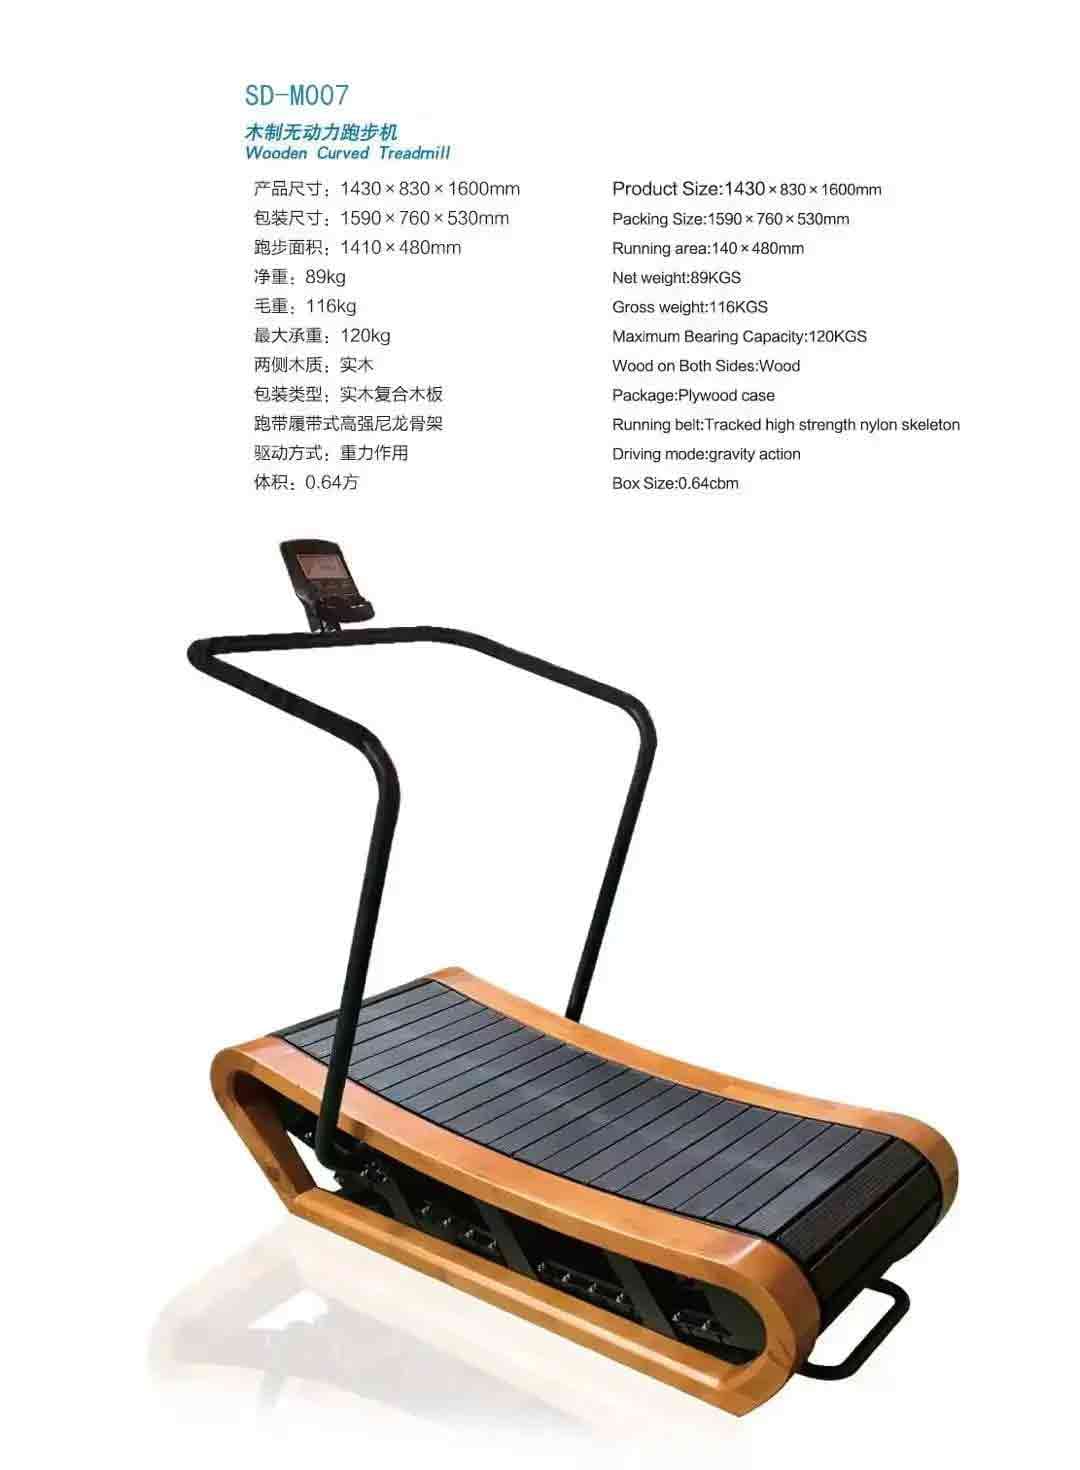 curved treadmill - SD-M007 - detail3